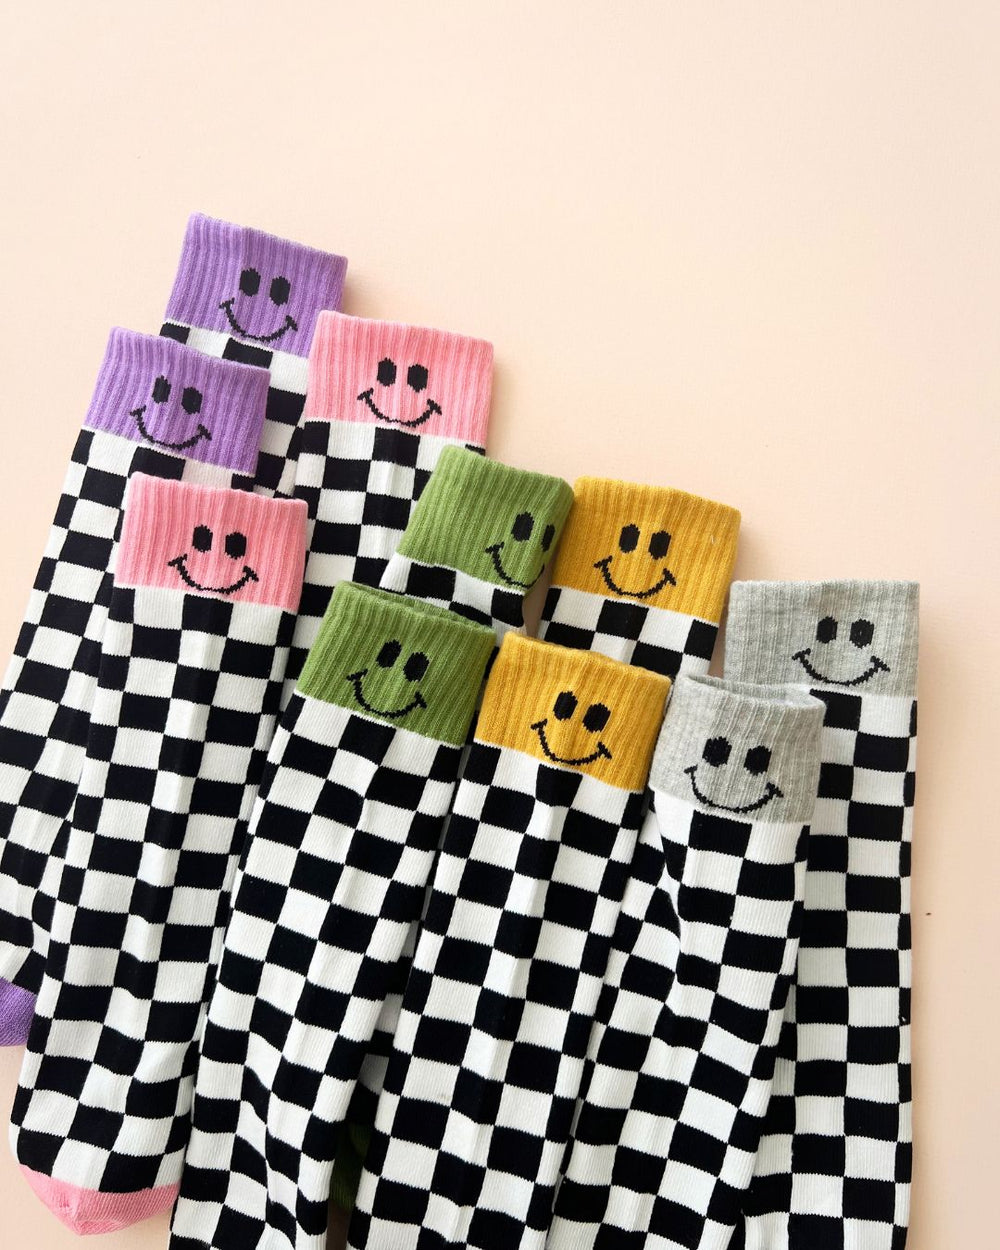 Checkered Smiley Socks | Yellow - Socks - LUCKY PANDA KIDS